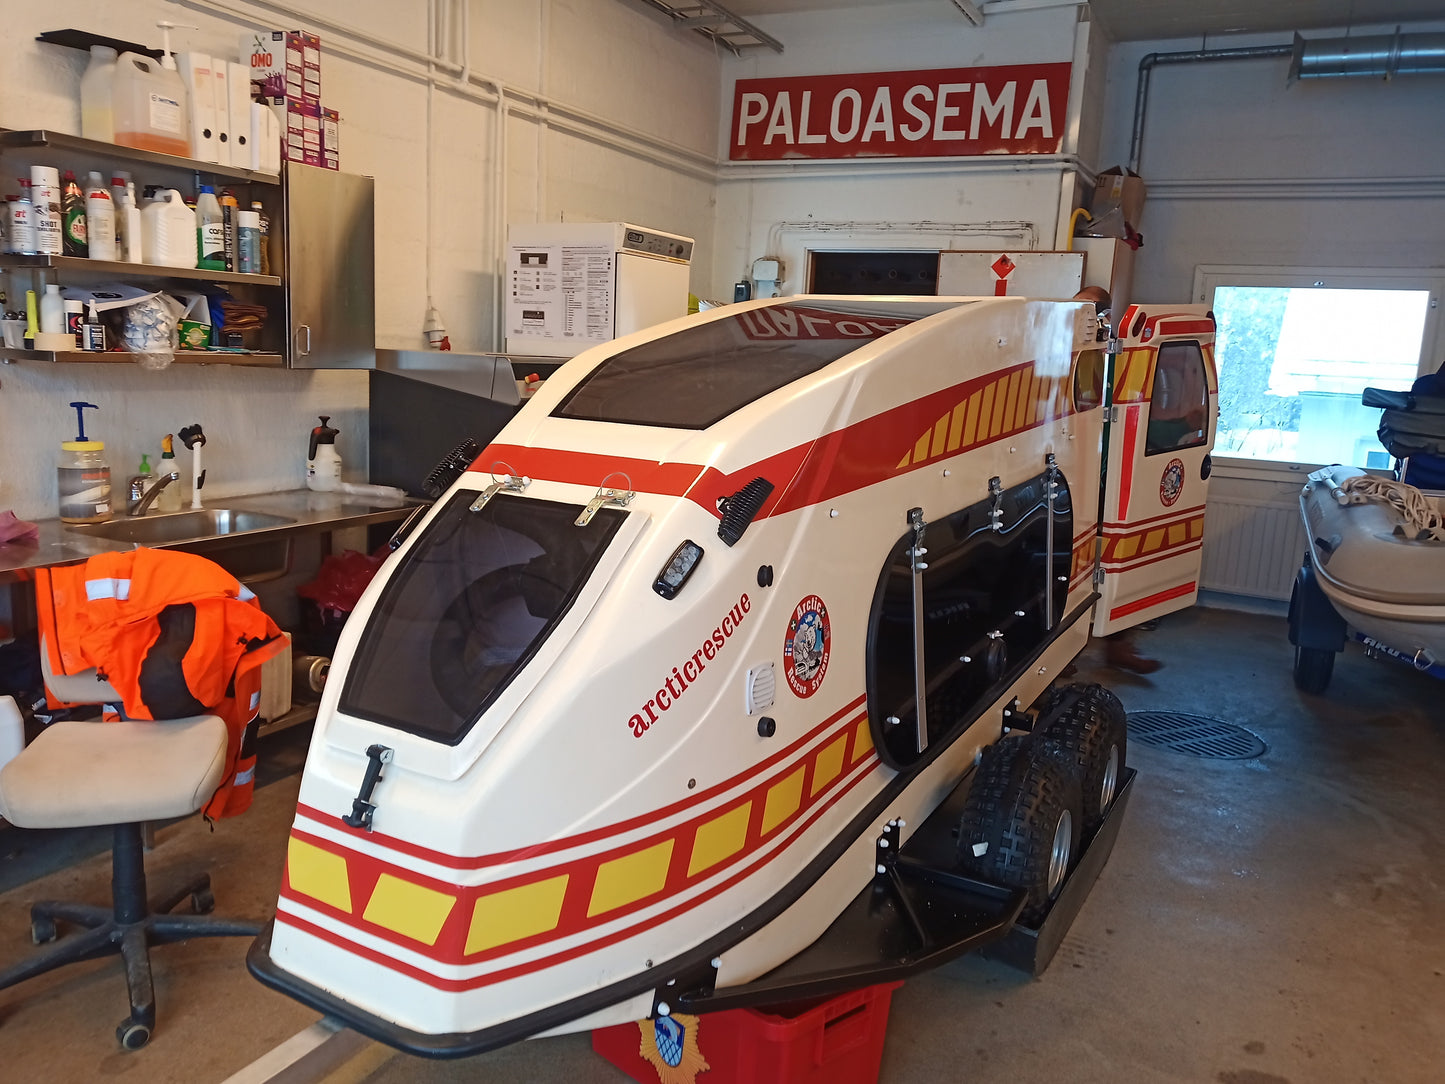 Arctic Rescue Ambulance